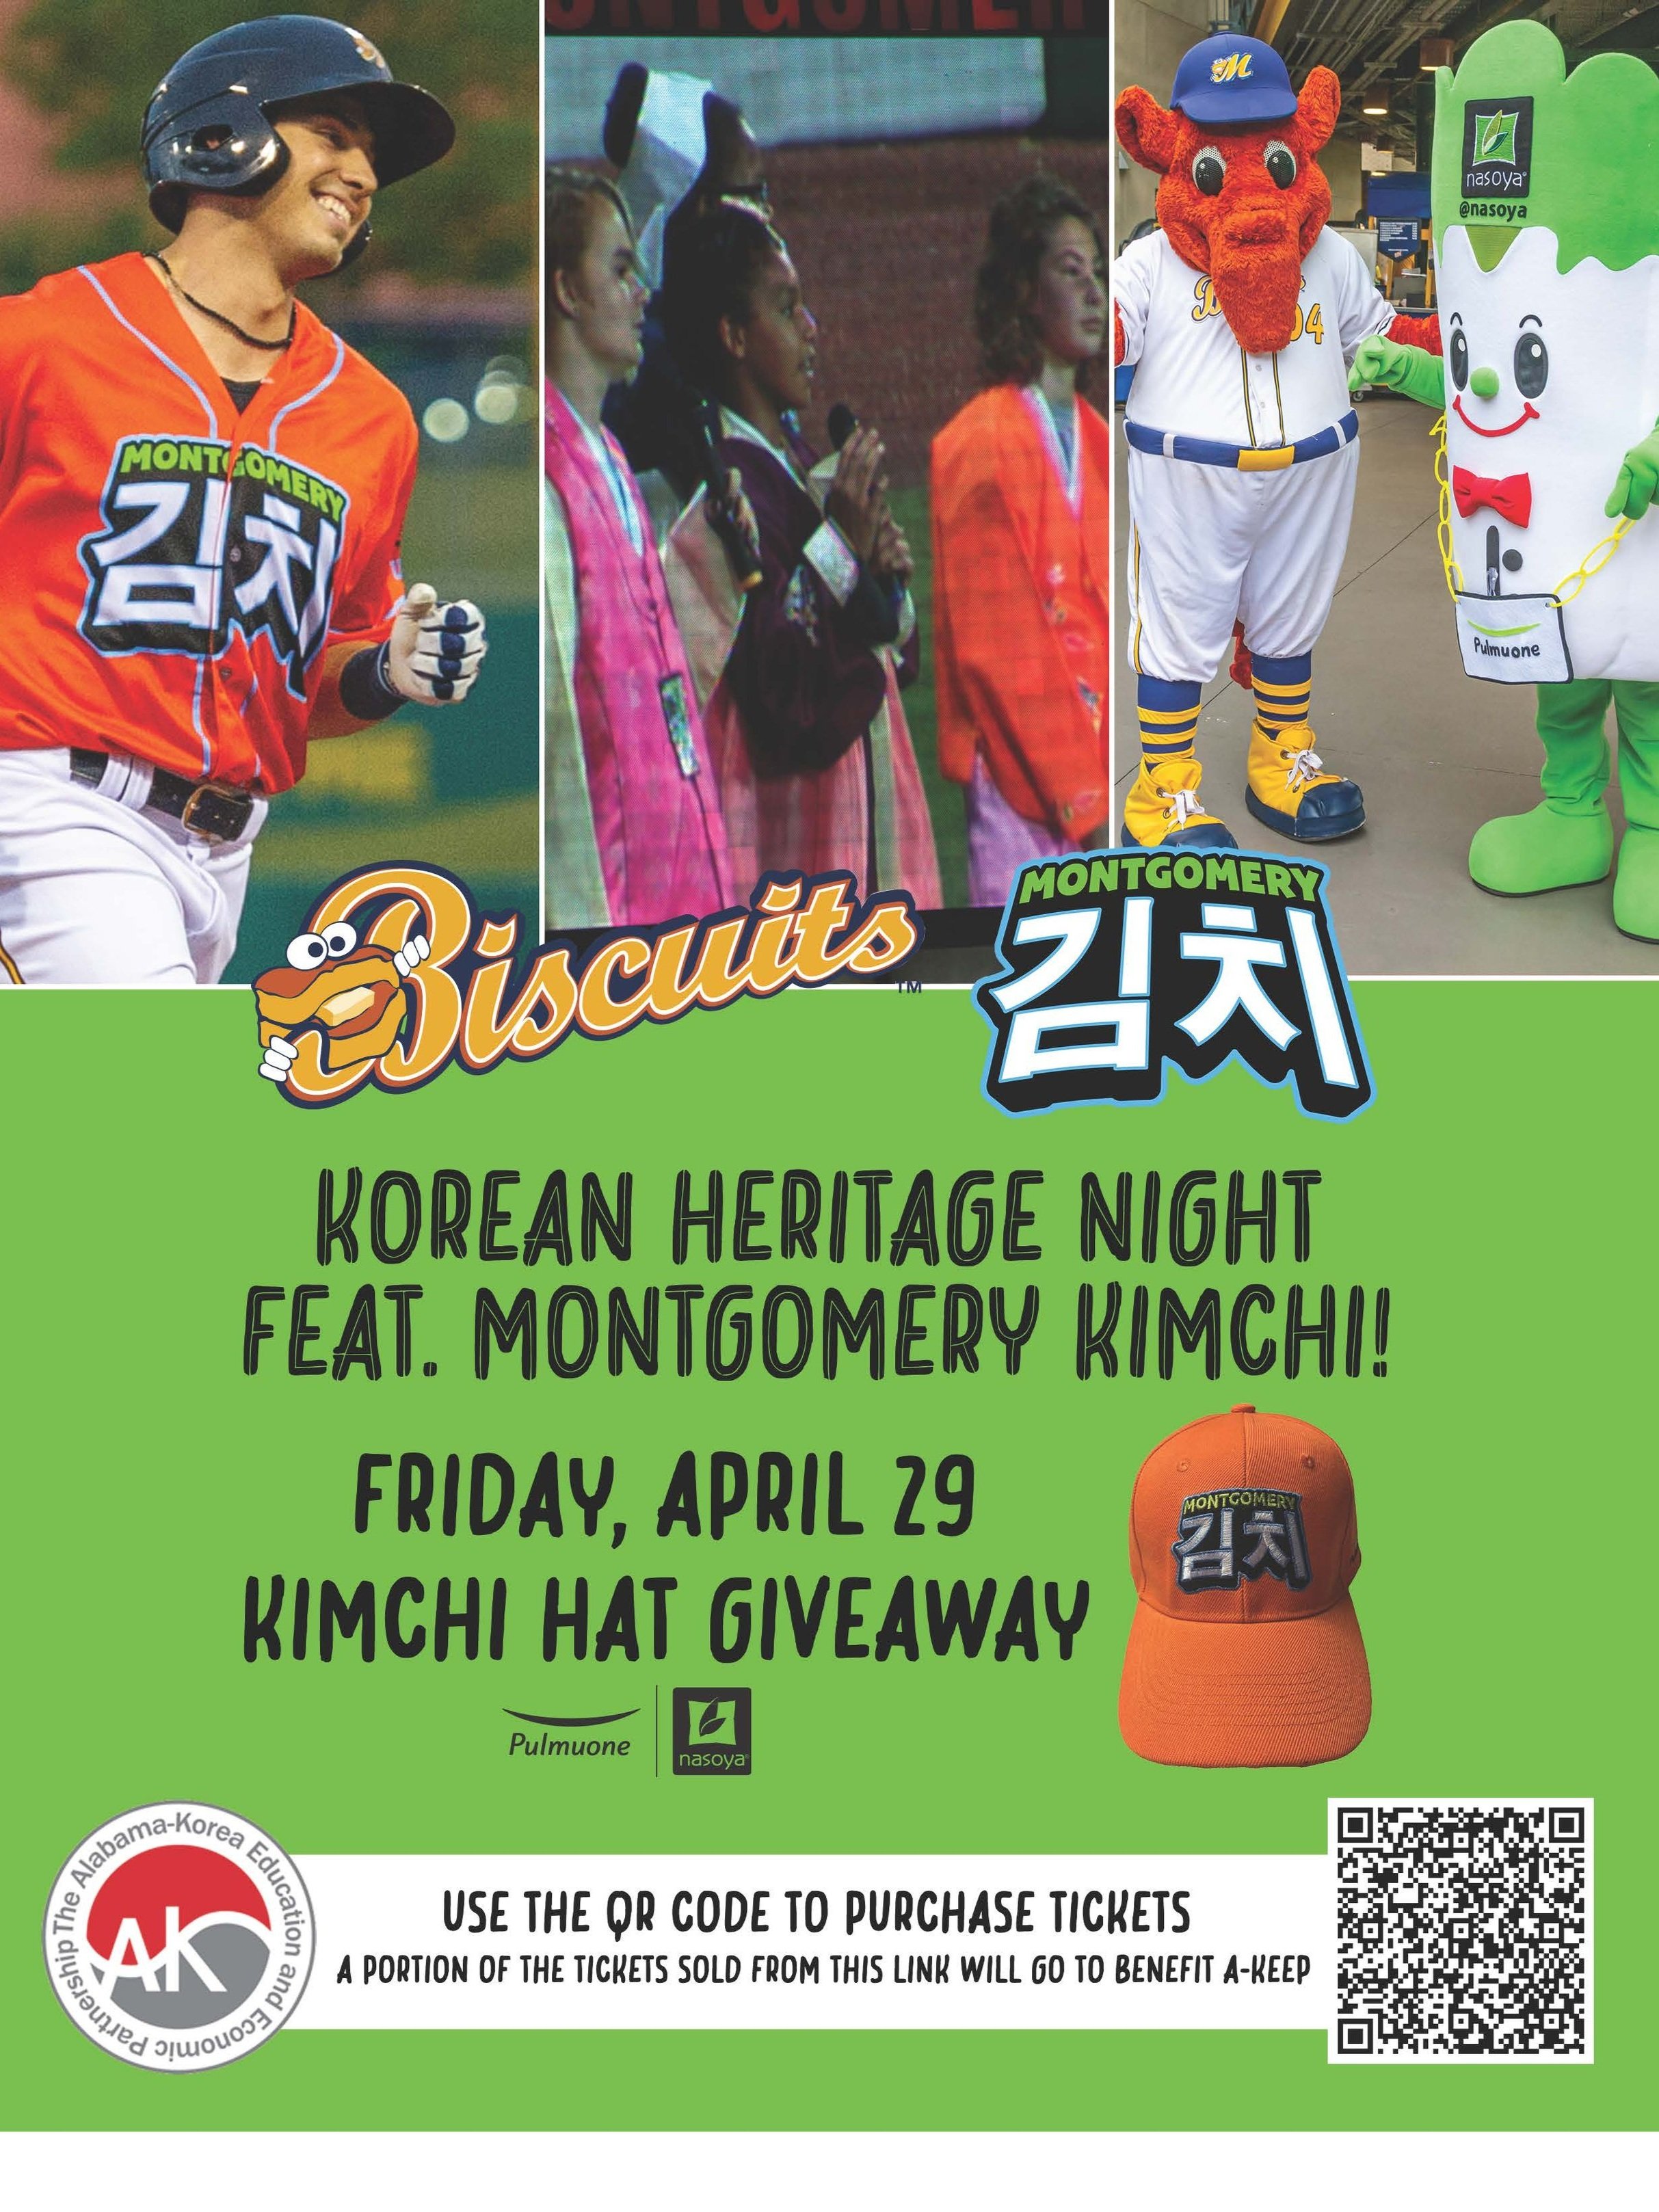 Korean Heritage Night @ Biscuit Stadium — A-KEEP